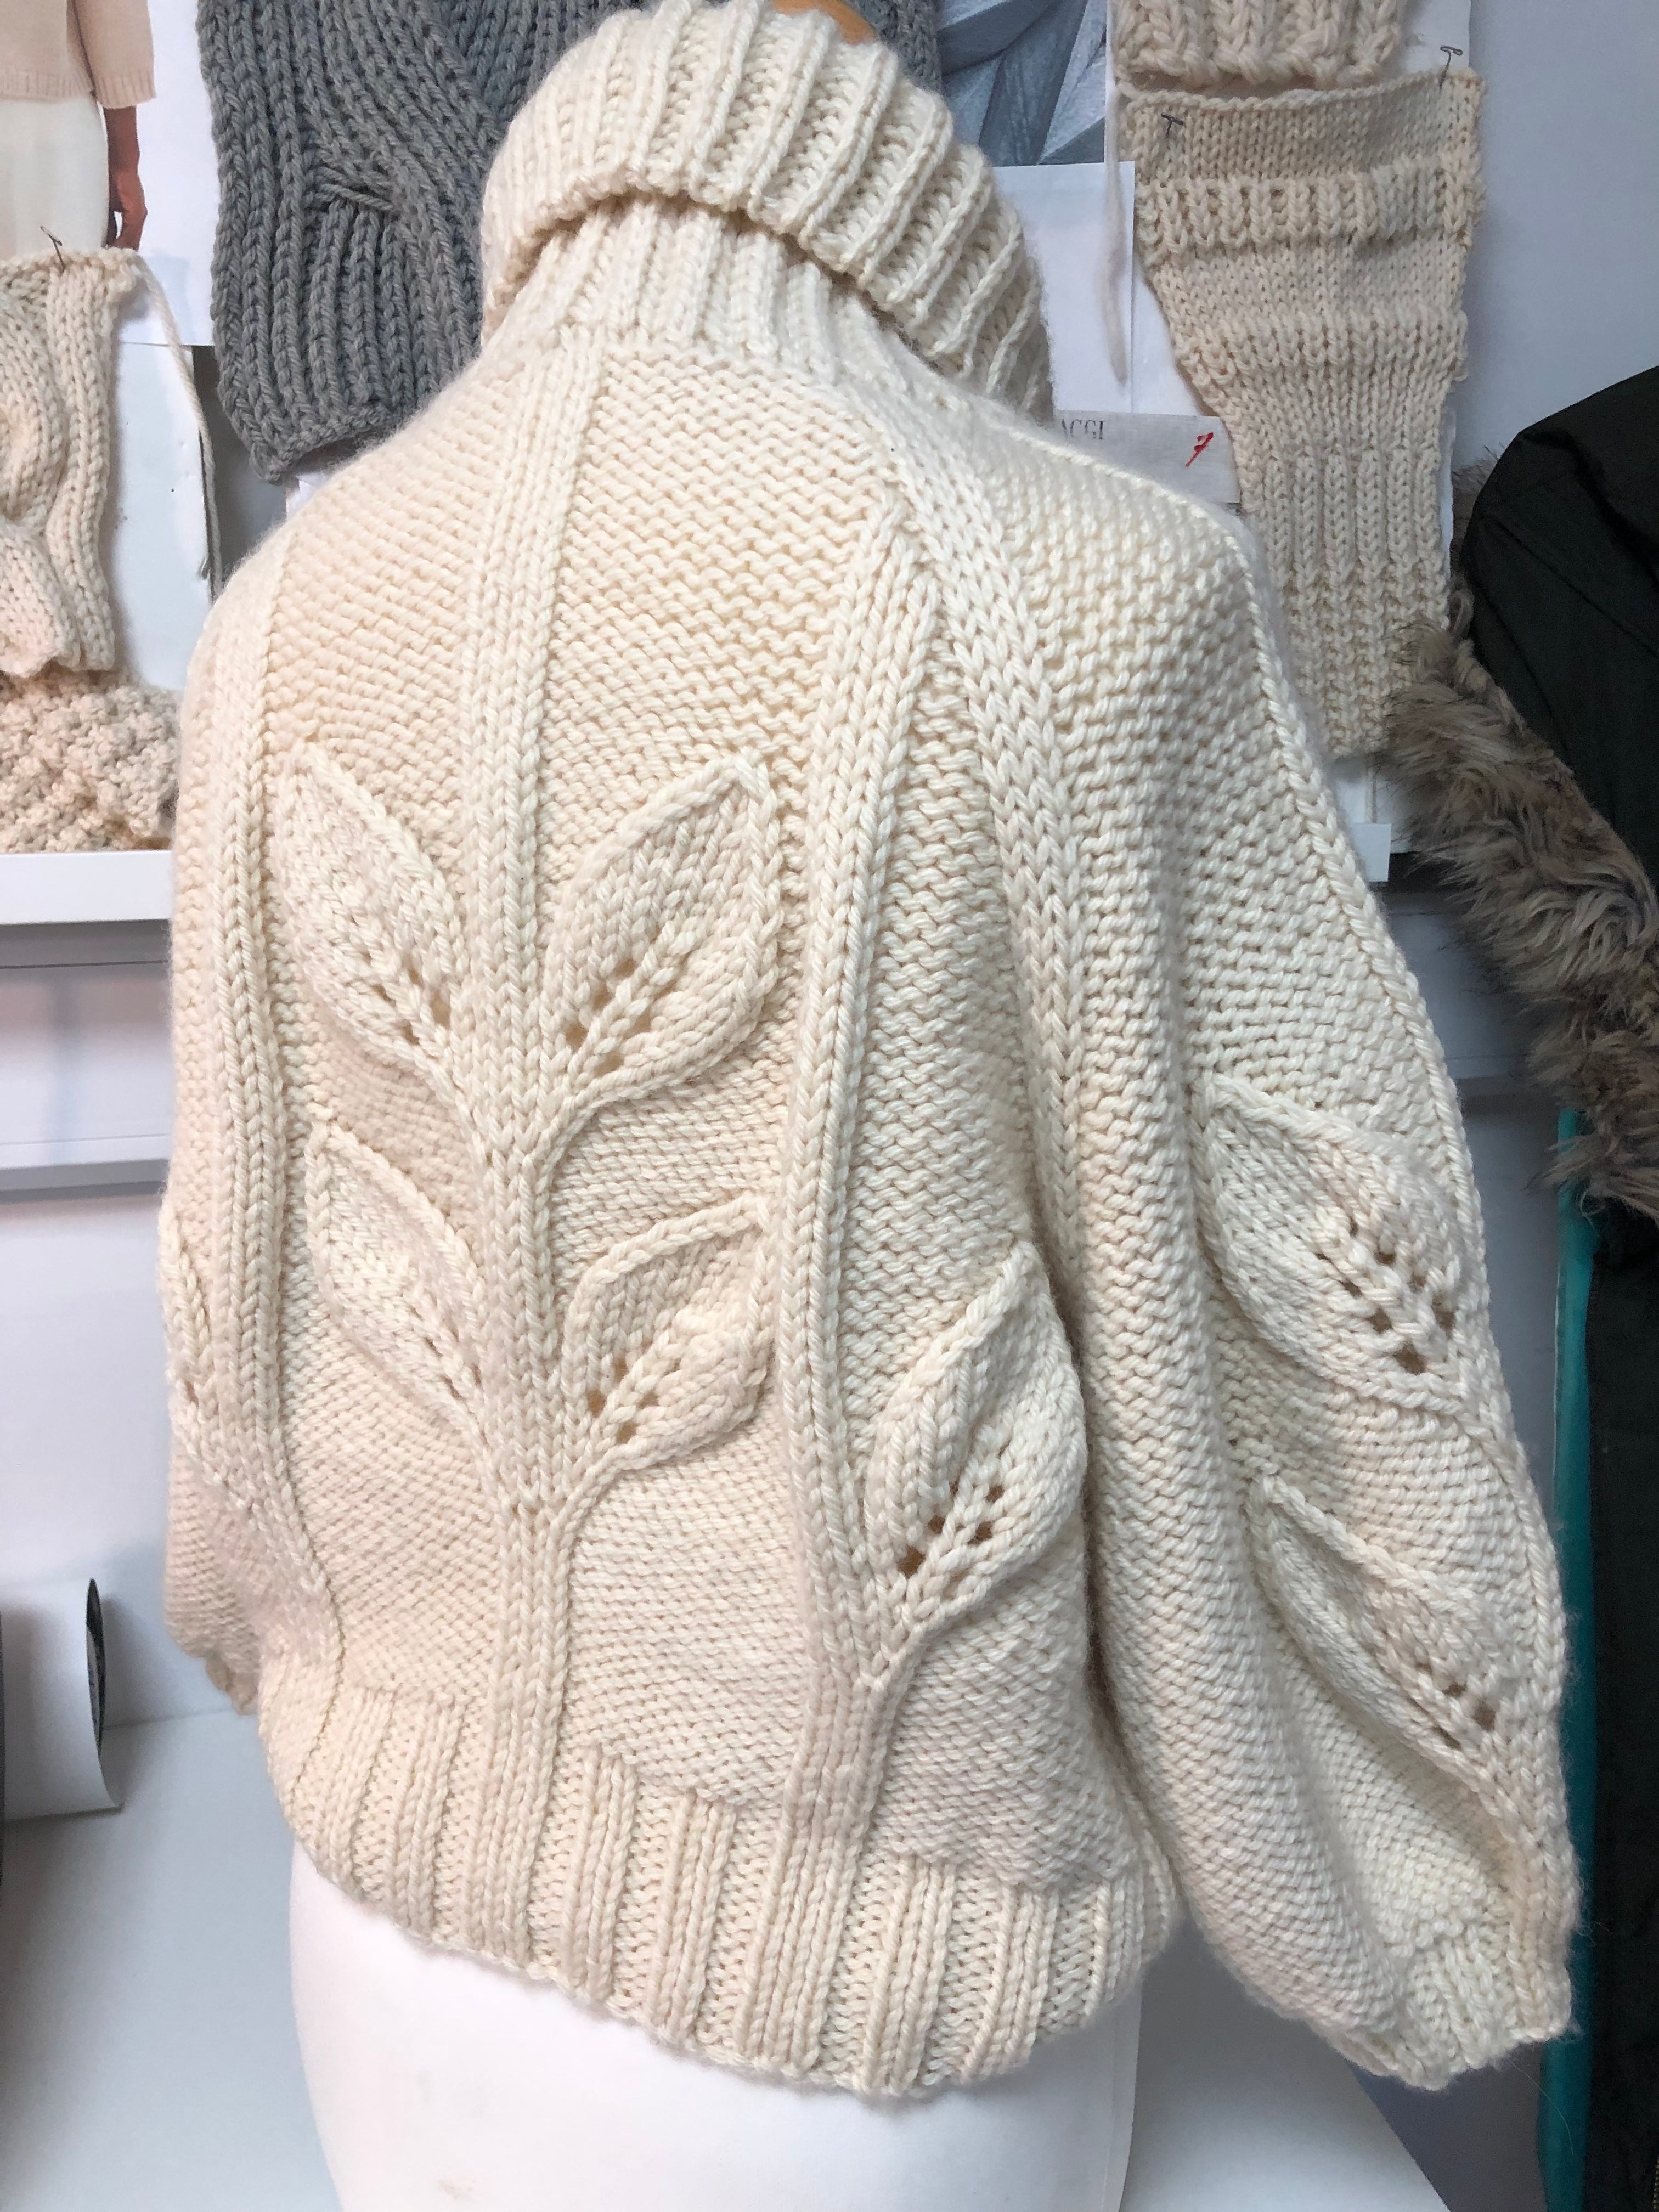 Alnwick knitting pattern and knit kit, using British yarn, natural and sustainable.